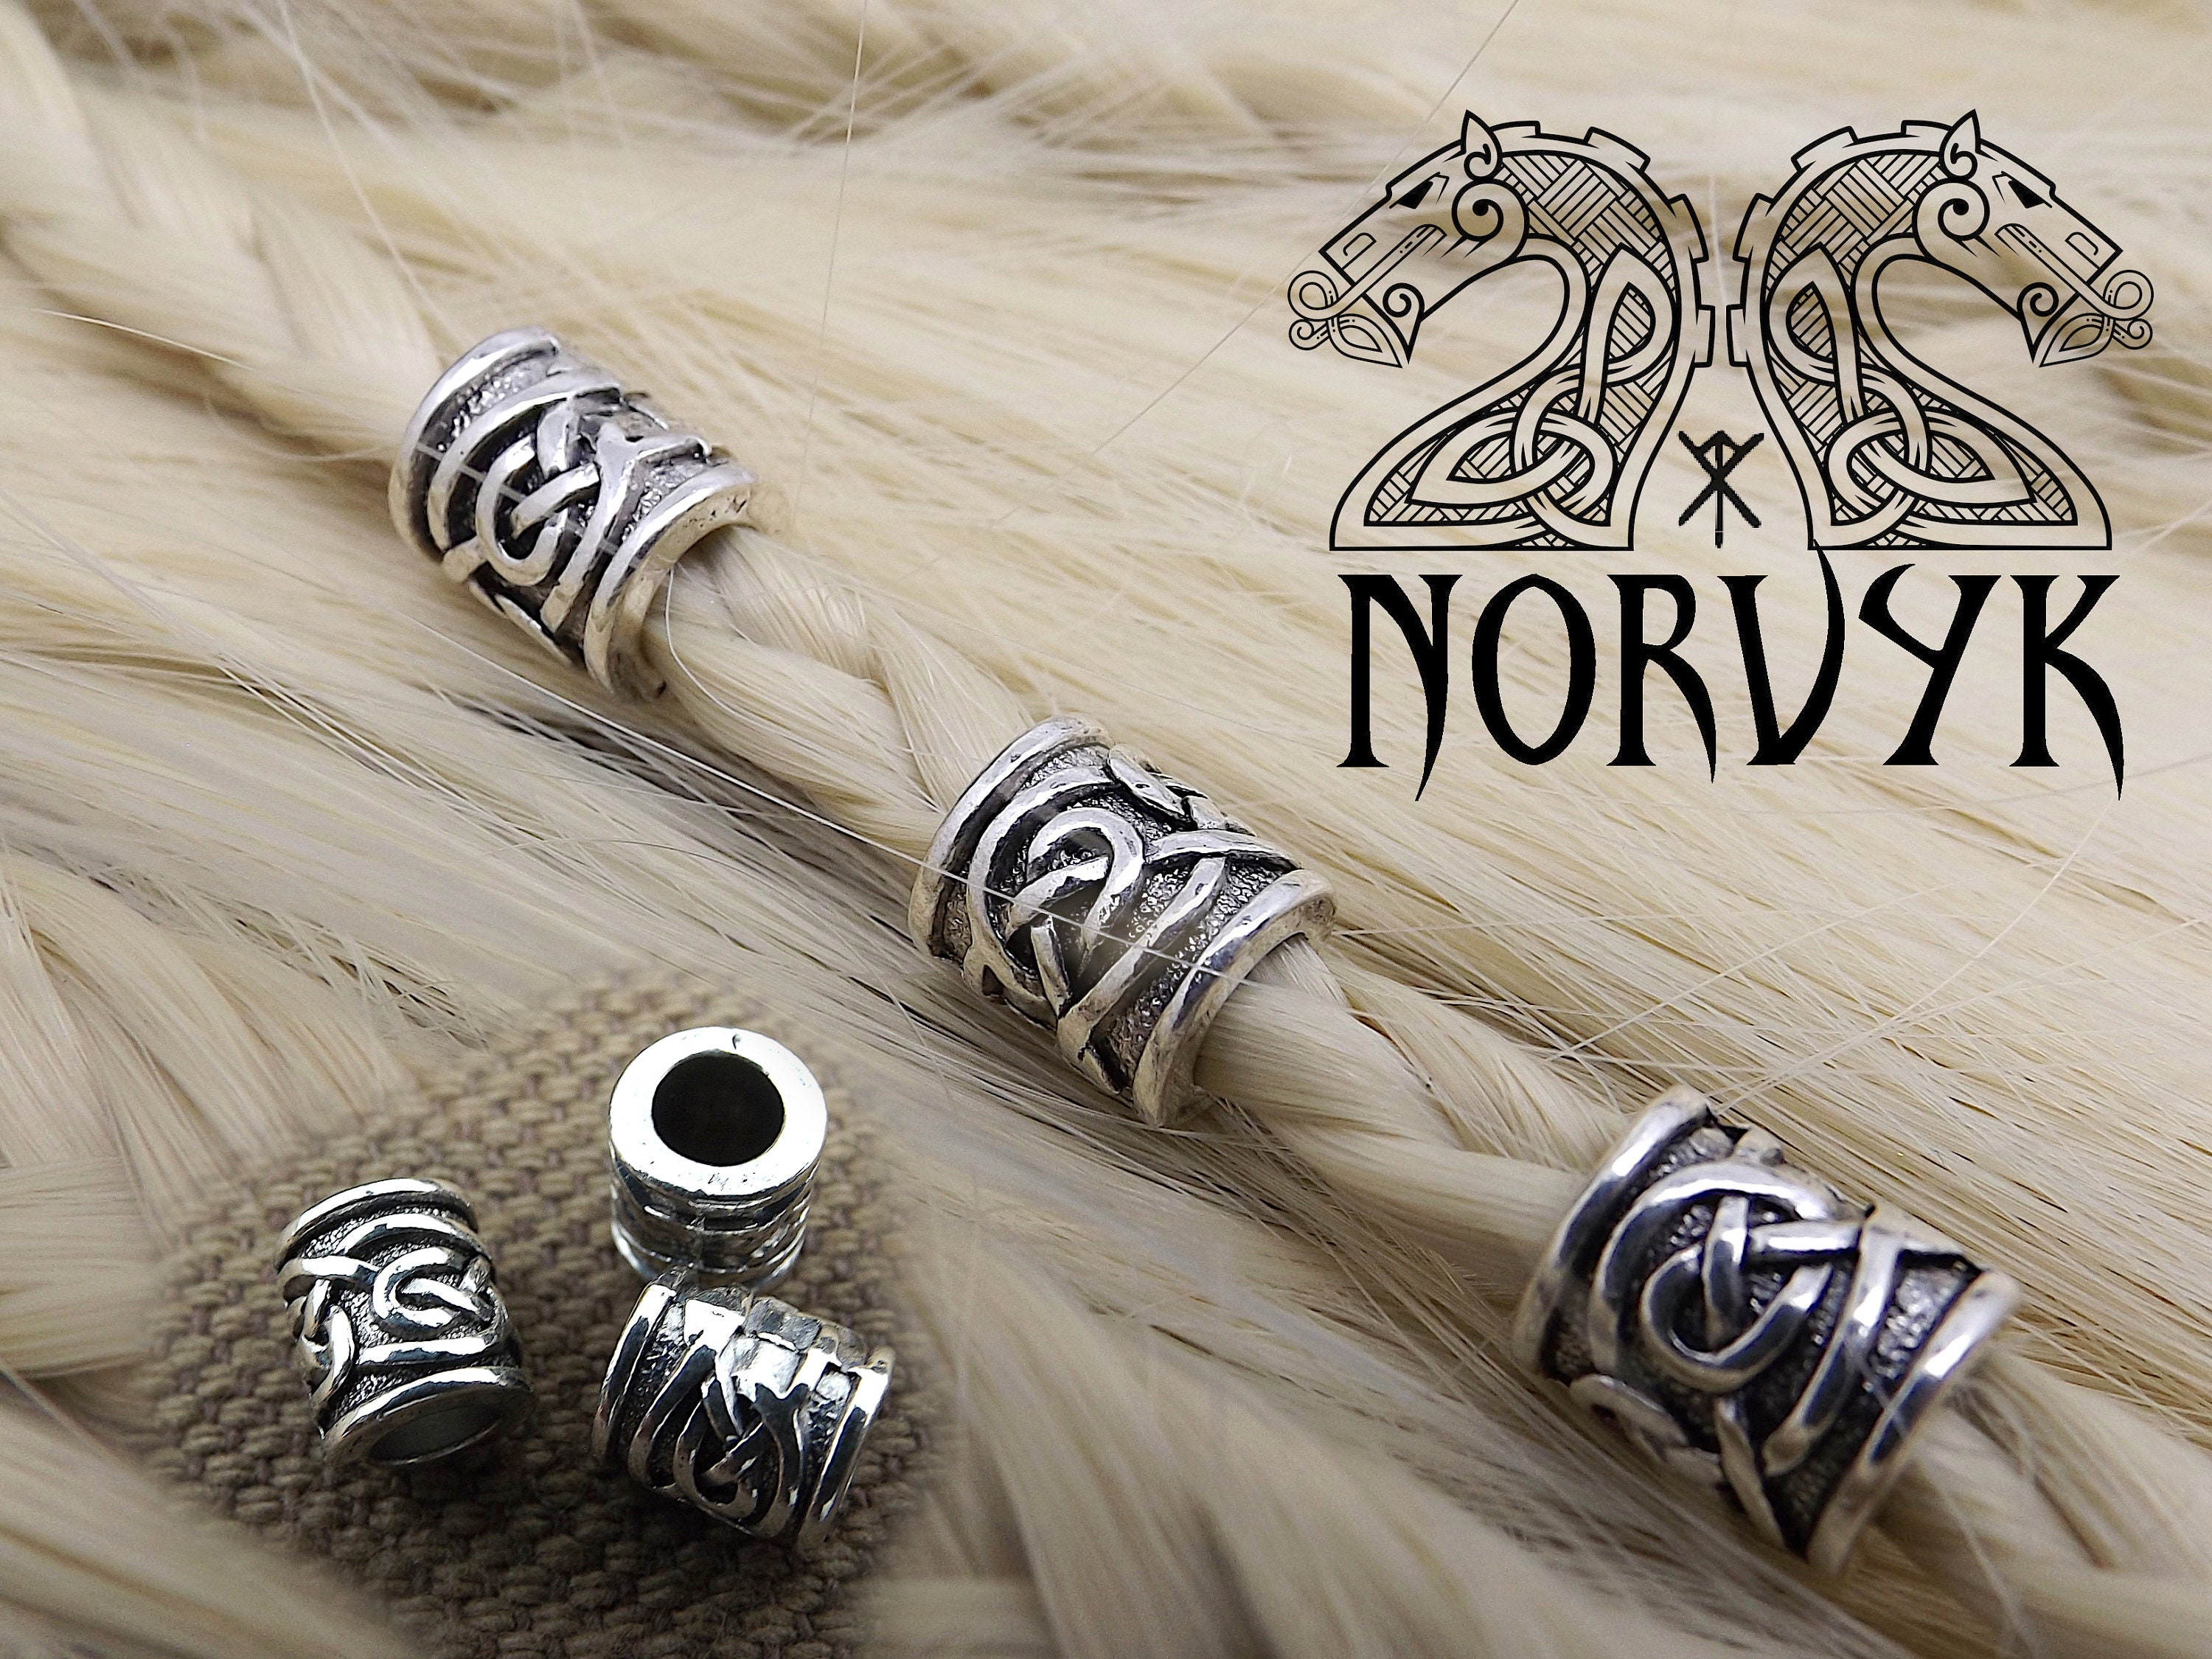 Vaikby 124pcs Viking Hair Beads Accessories, Hair Jewelry Beard Beads for Hair Braids Dreadlocks Accessories, Metal Clips Cuffs Coils, Christmas Gifts